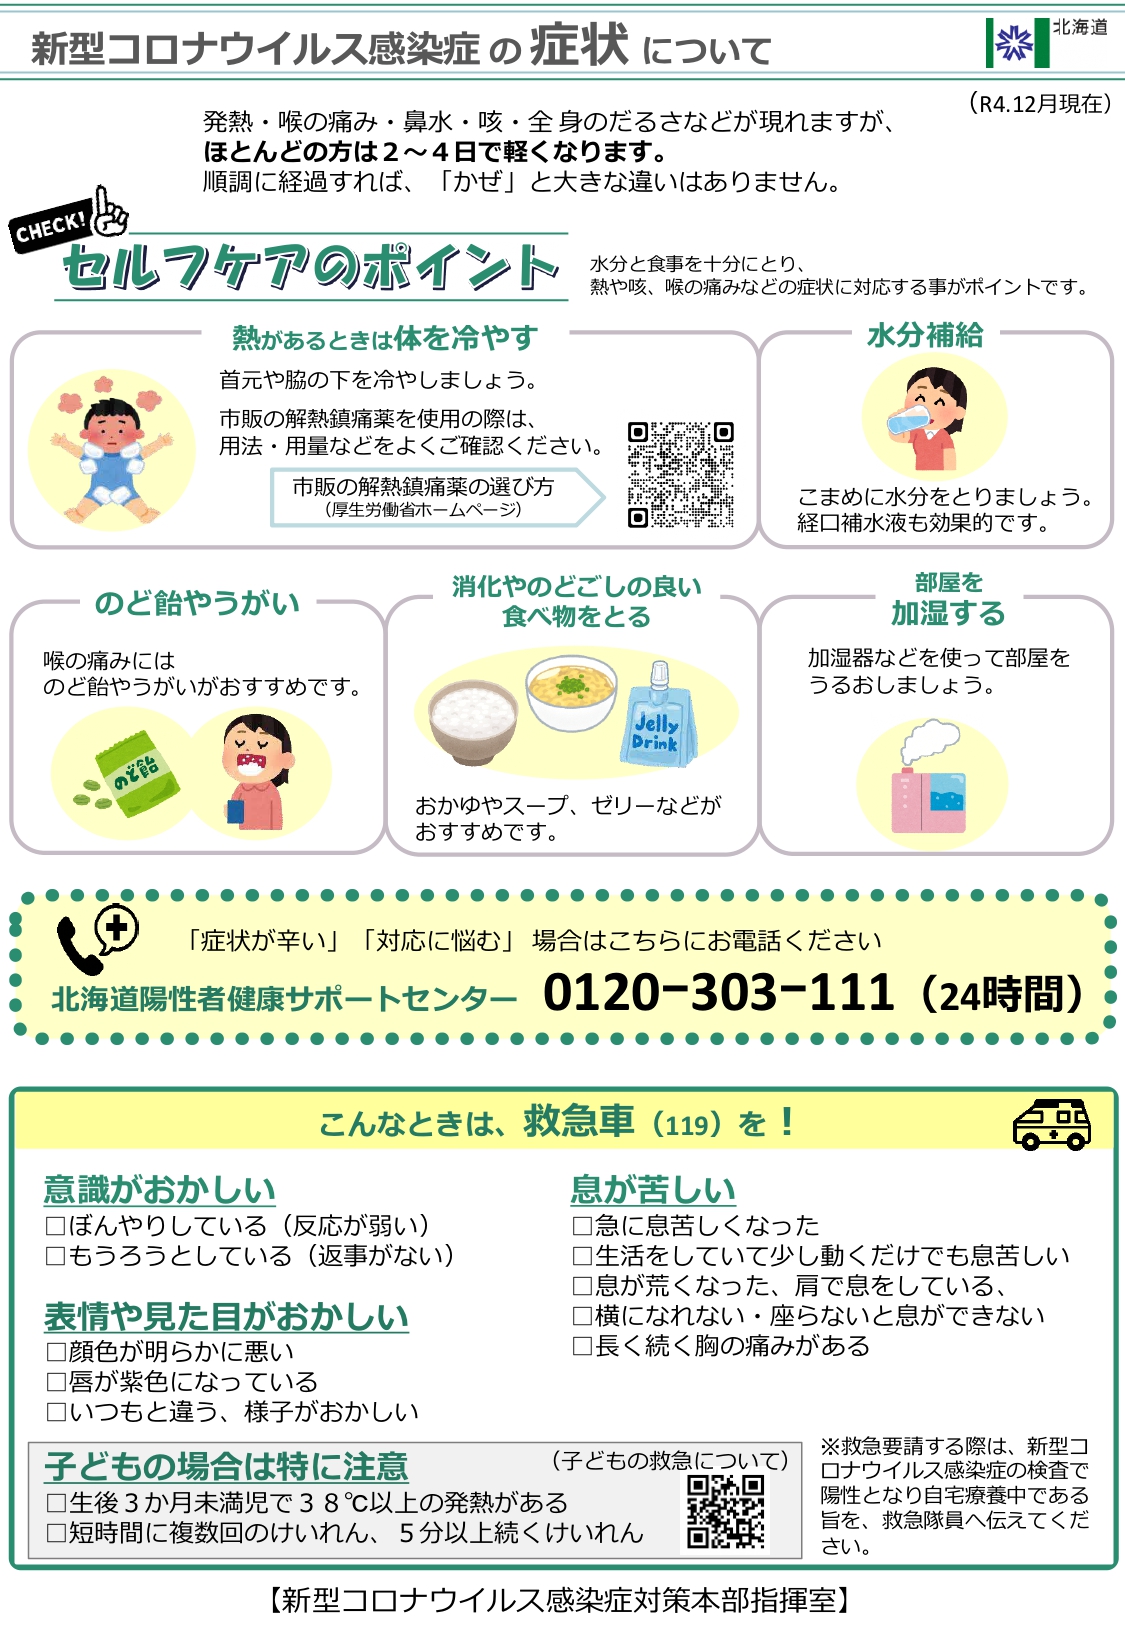 https://www.town.atsuma.lg.jp/office/content/uploads/2022/12/R4.12_21_corona_syoujou_page-0001.jpg